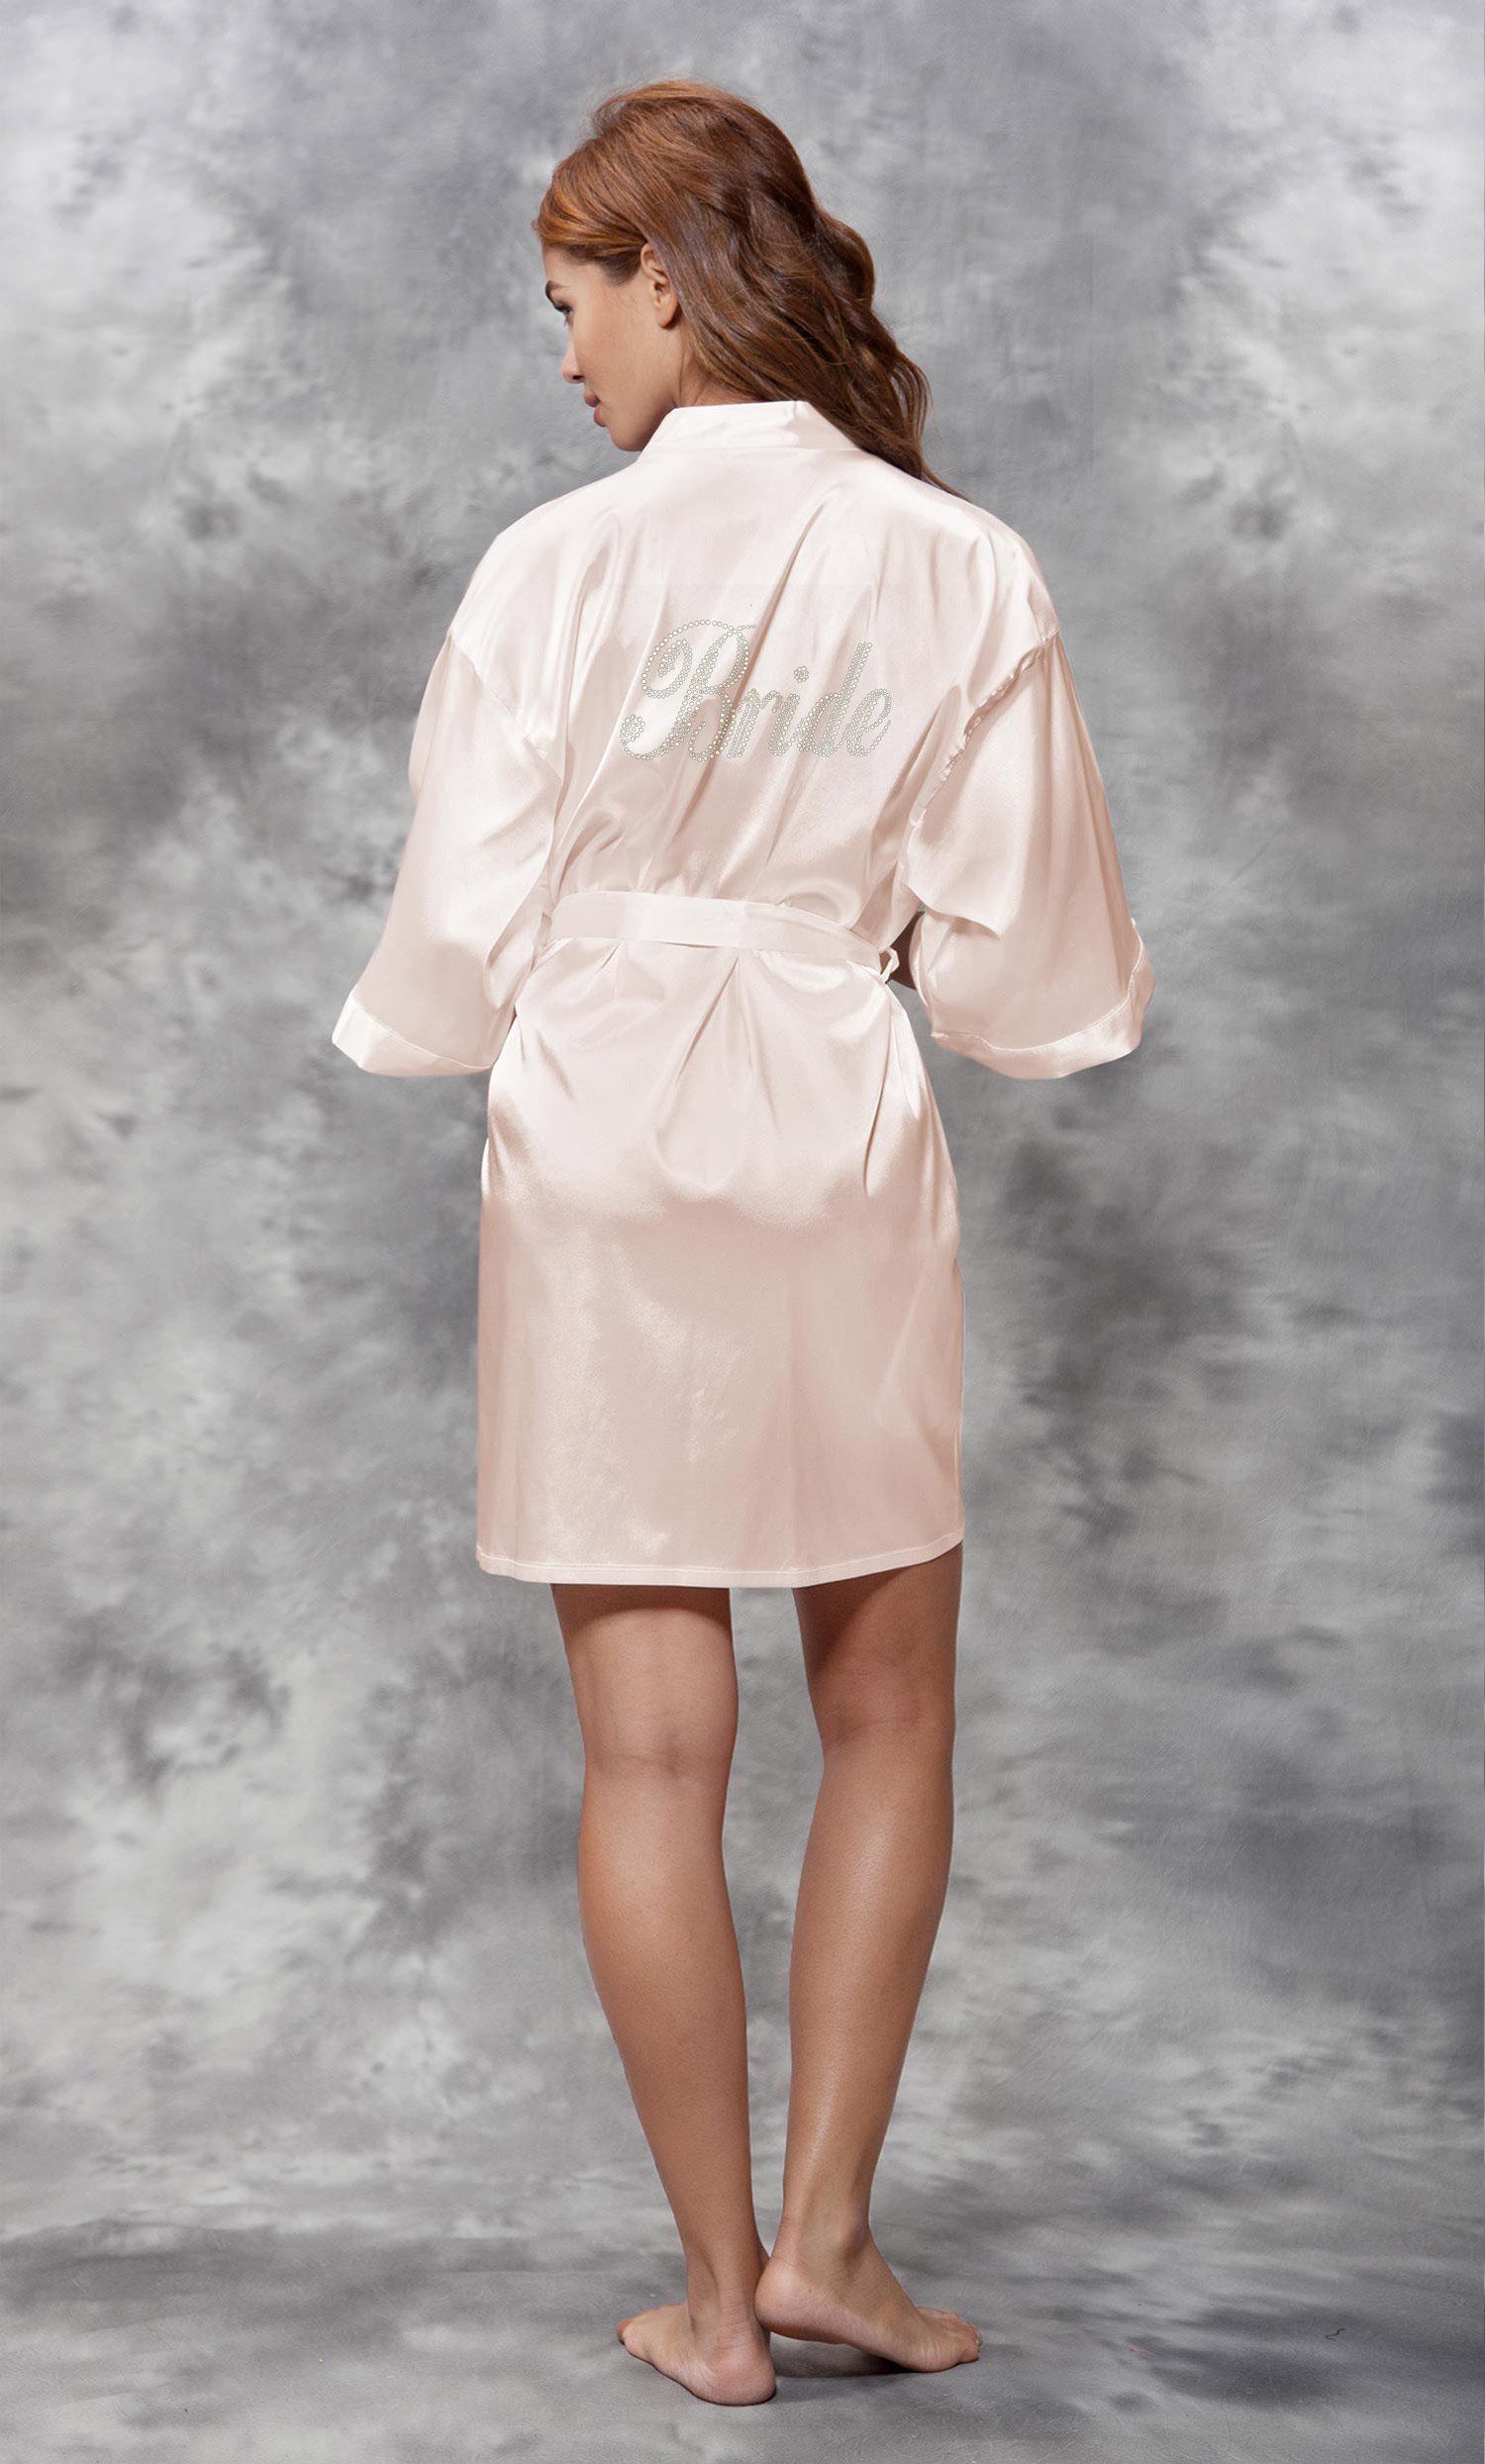 Bride Clear Rhinestone Satin Kimono White Peach Short Robe-Robemart.com